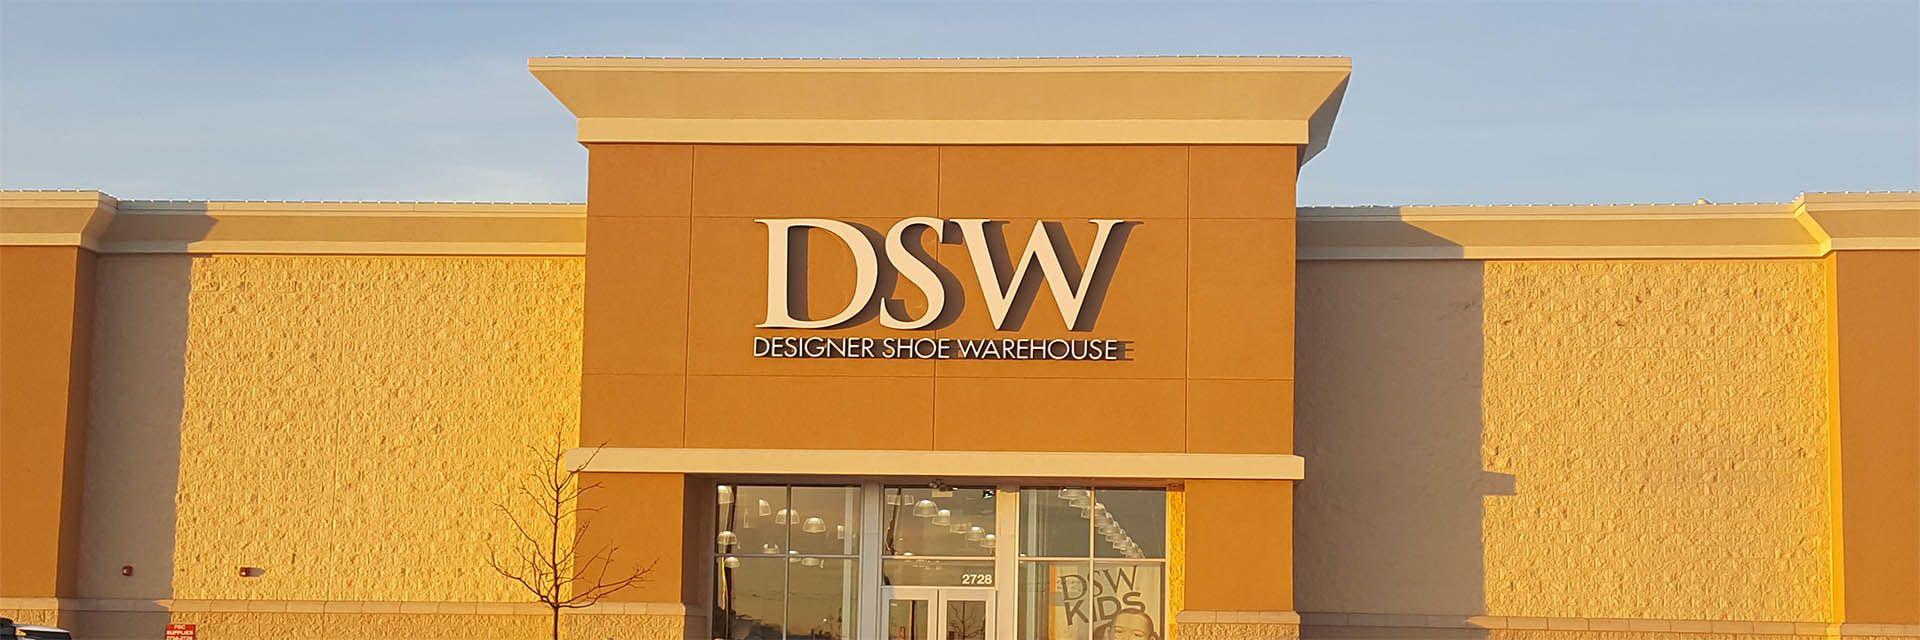 DSW Logo - DSW Designer Shoe Warehouse